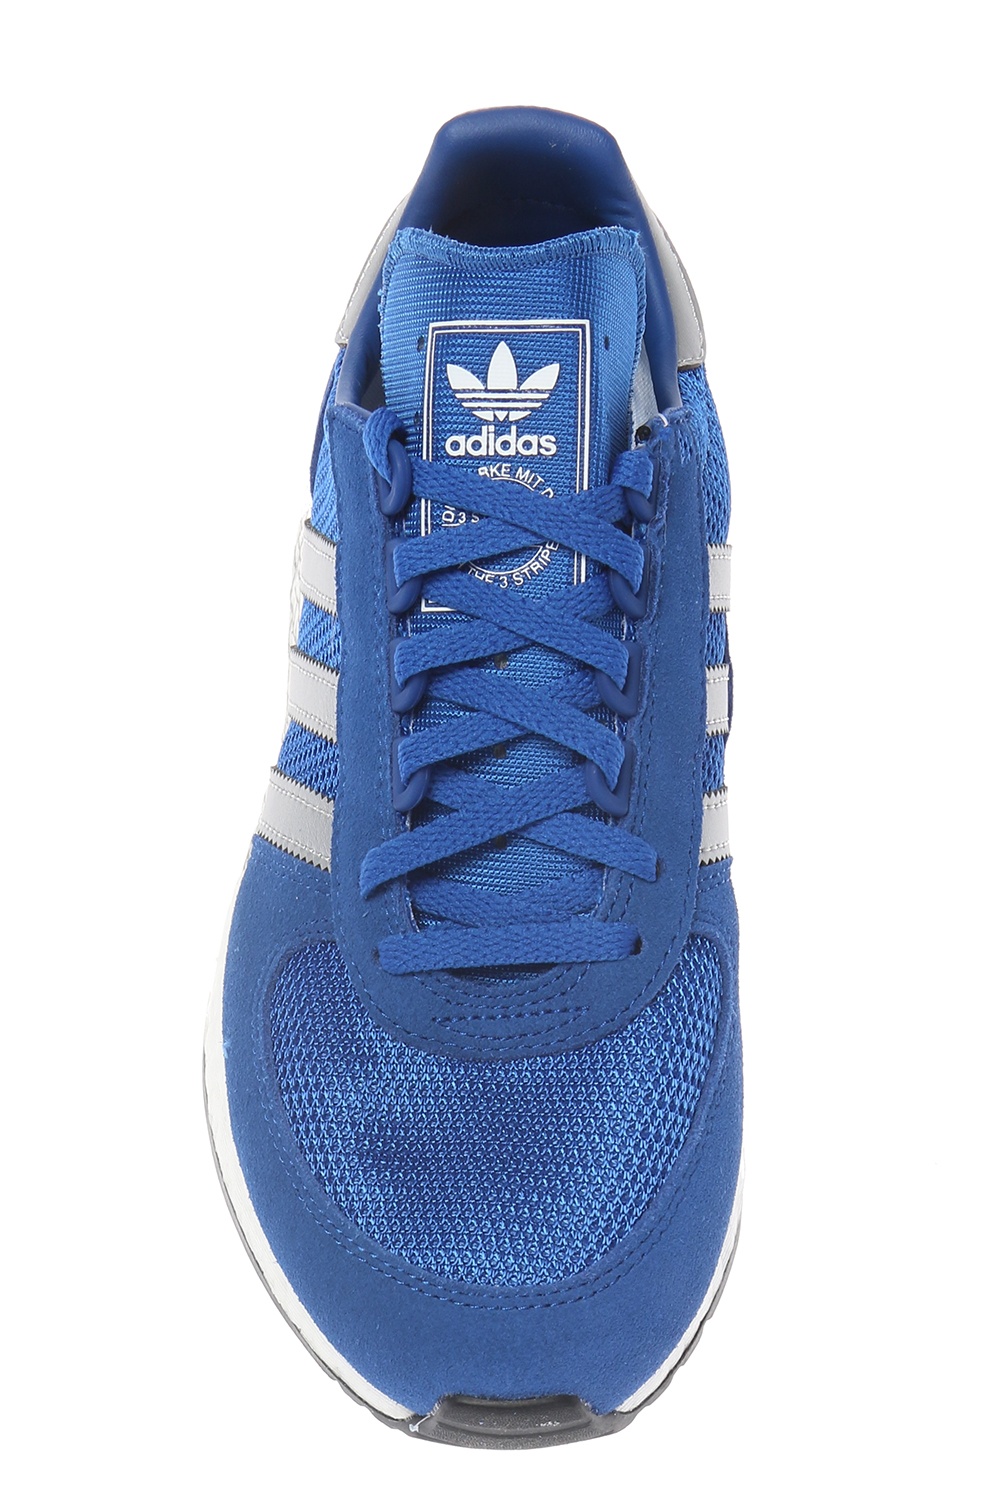 adidas originals women's marathon x 5923 shoes